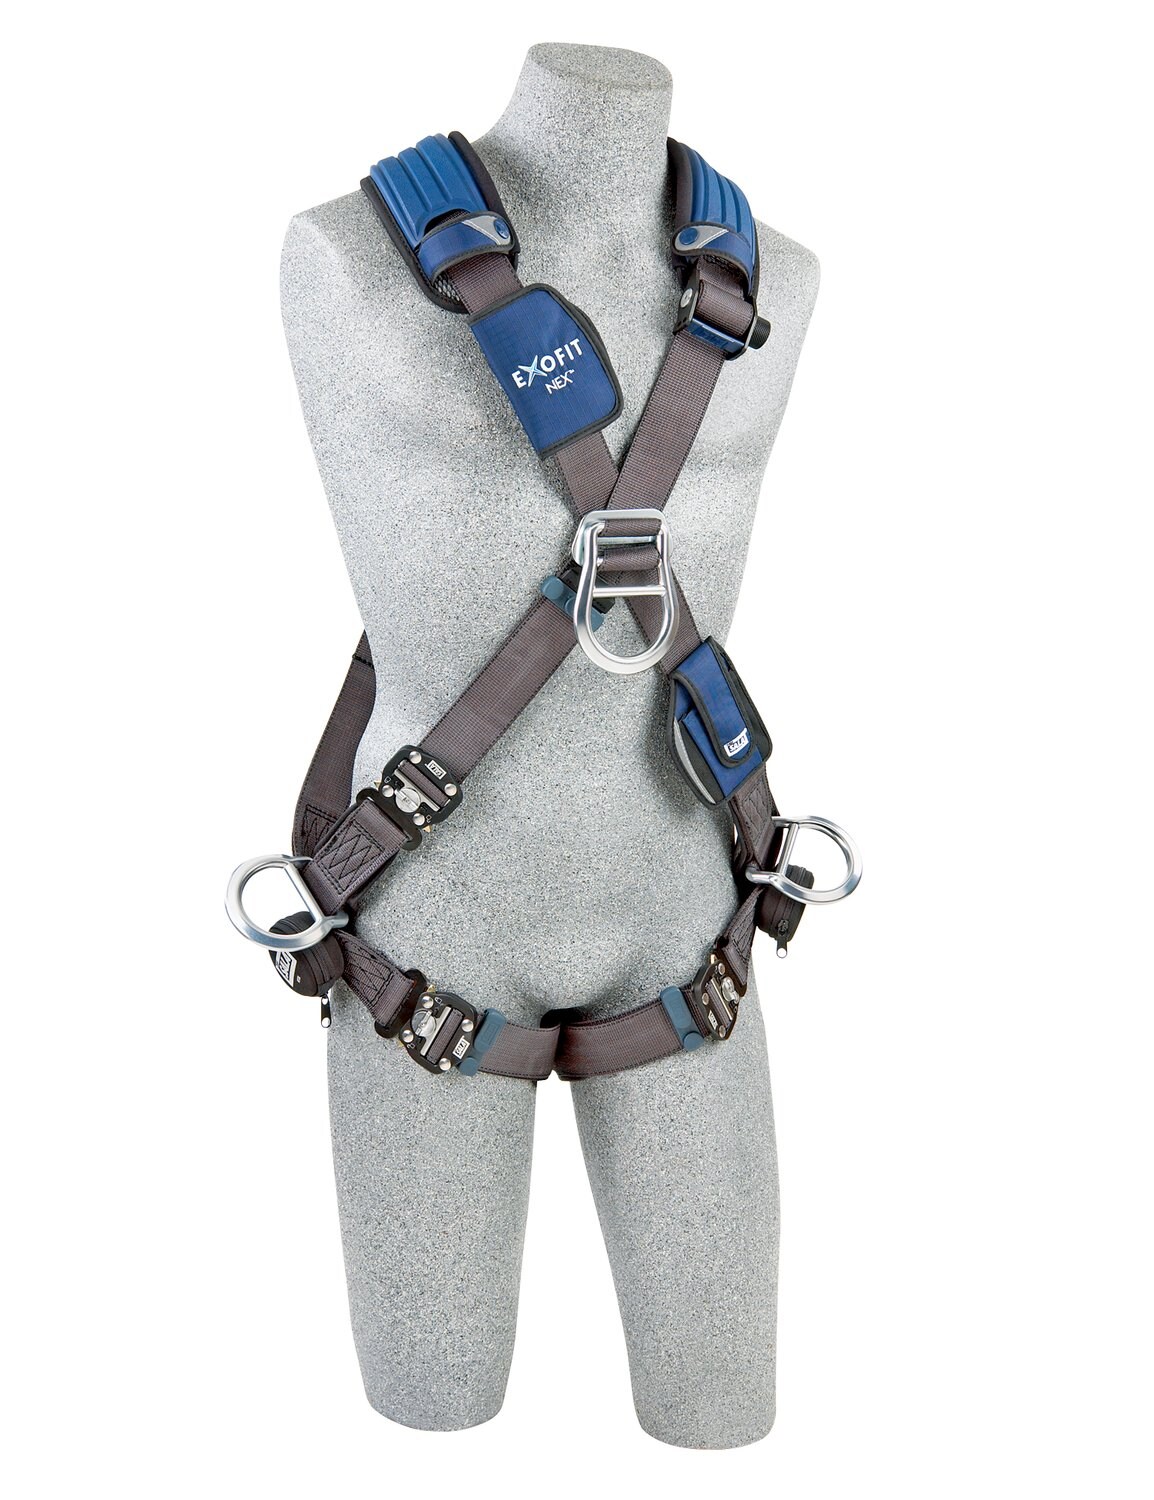 7012816191 - 3M DBI-SALA ExoFit NEX Comfort Cross-Over Climbing/Positioning Safety Harness 1113105, X-Small